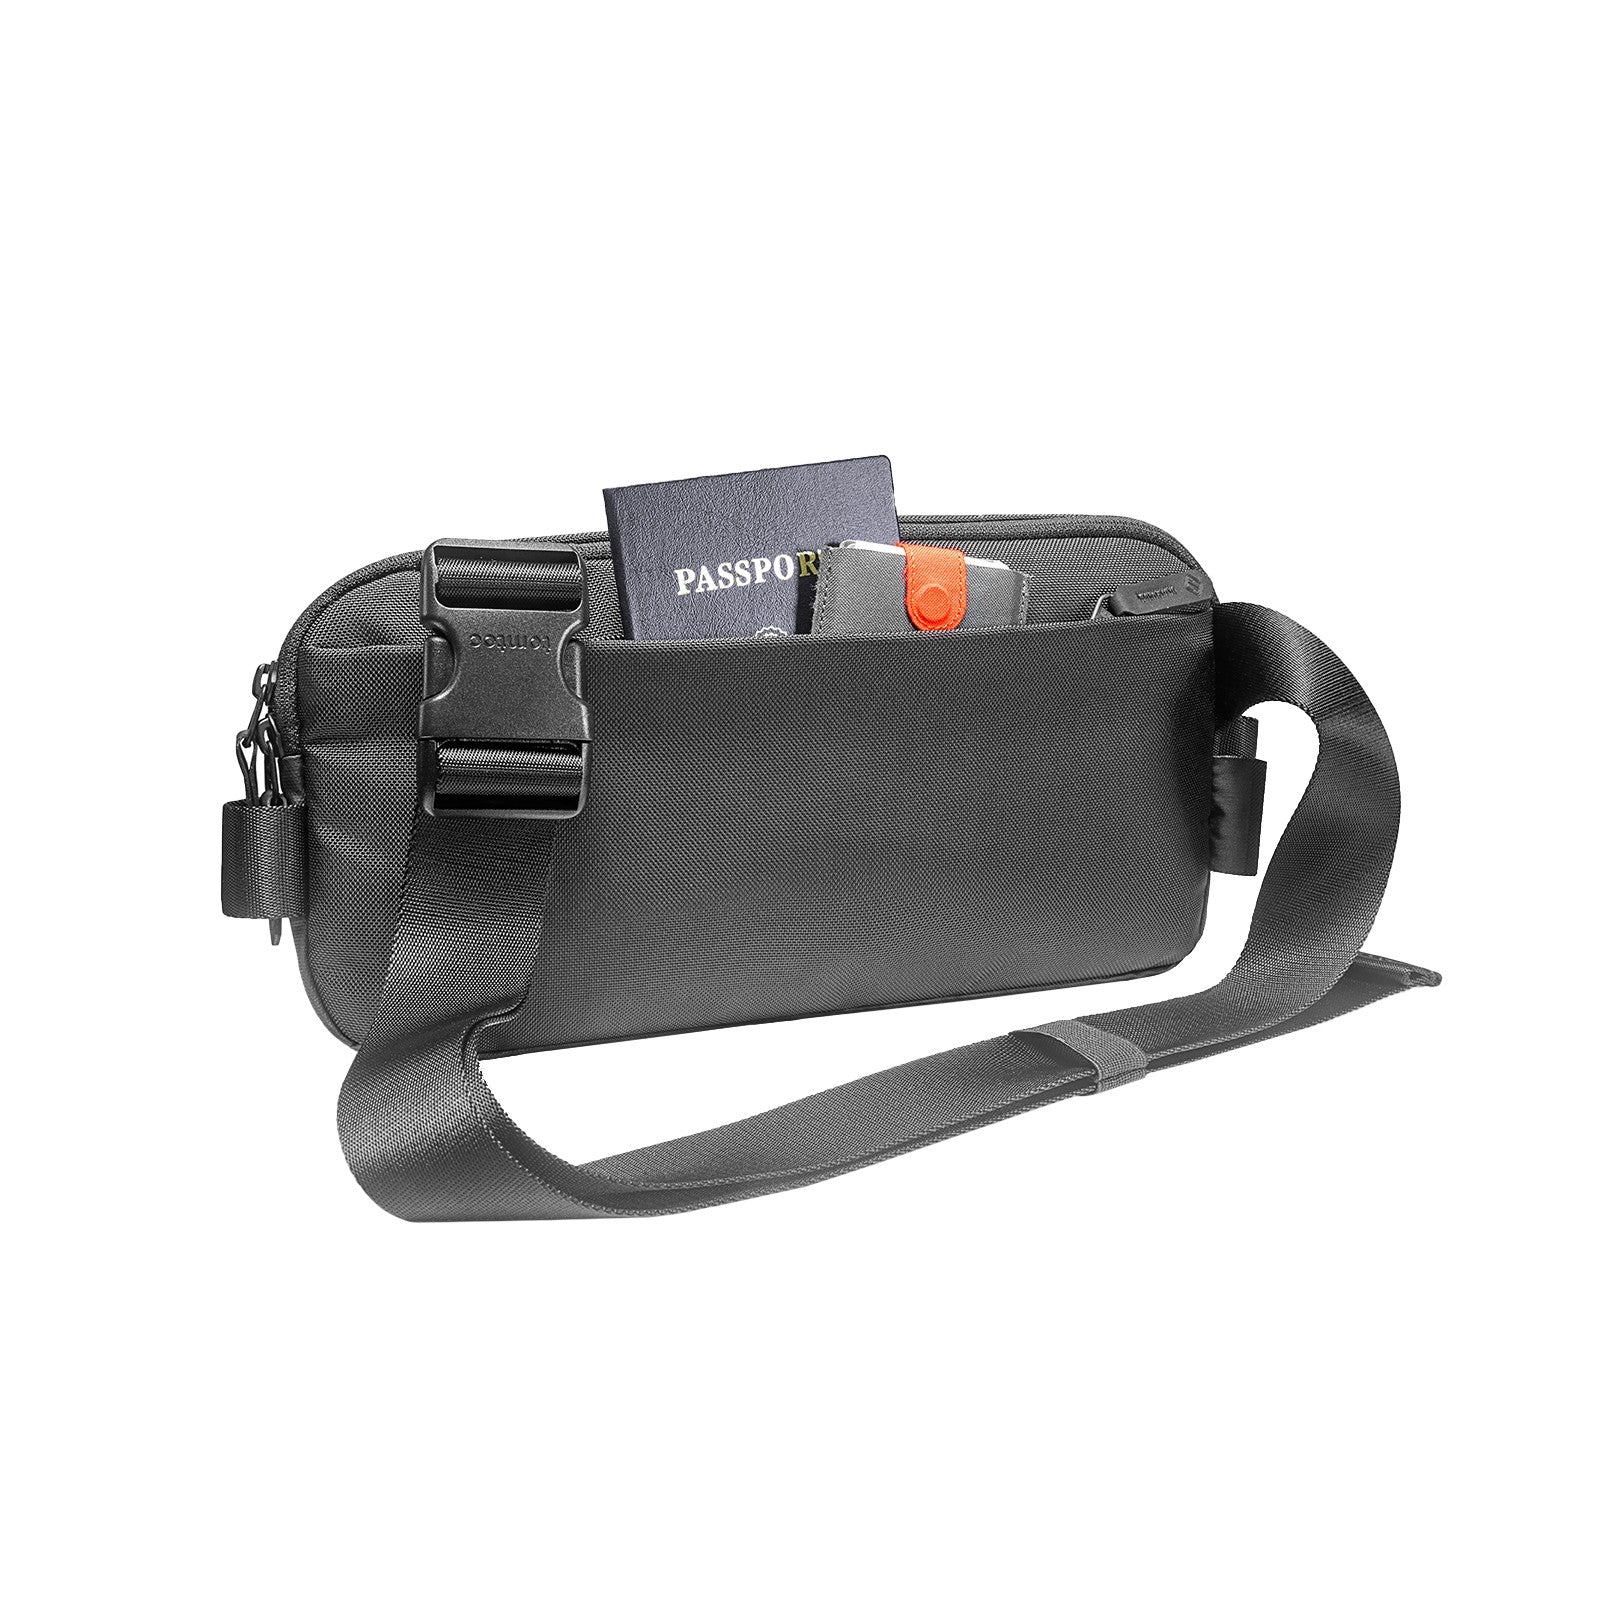 Urban Satchel Bag with Smart Sleeve- Black